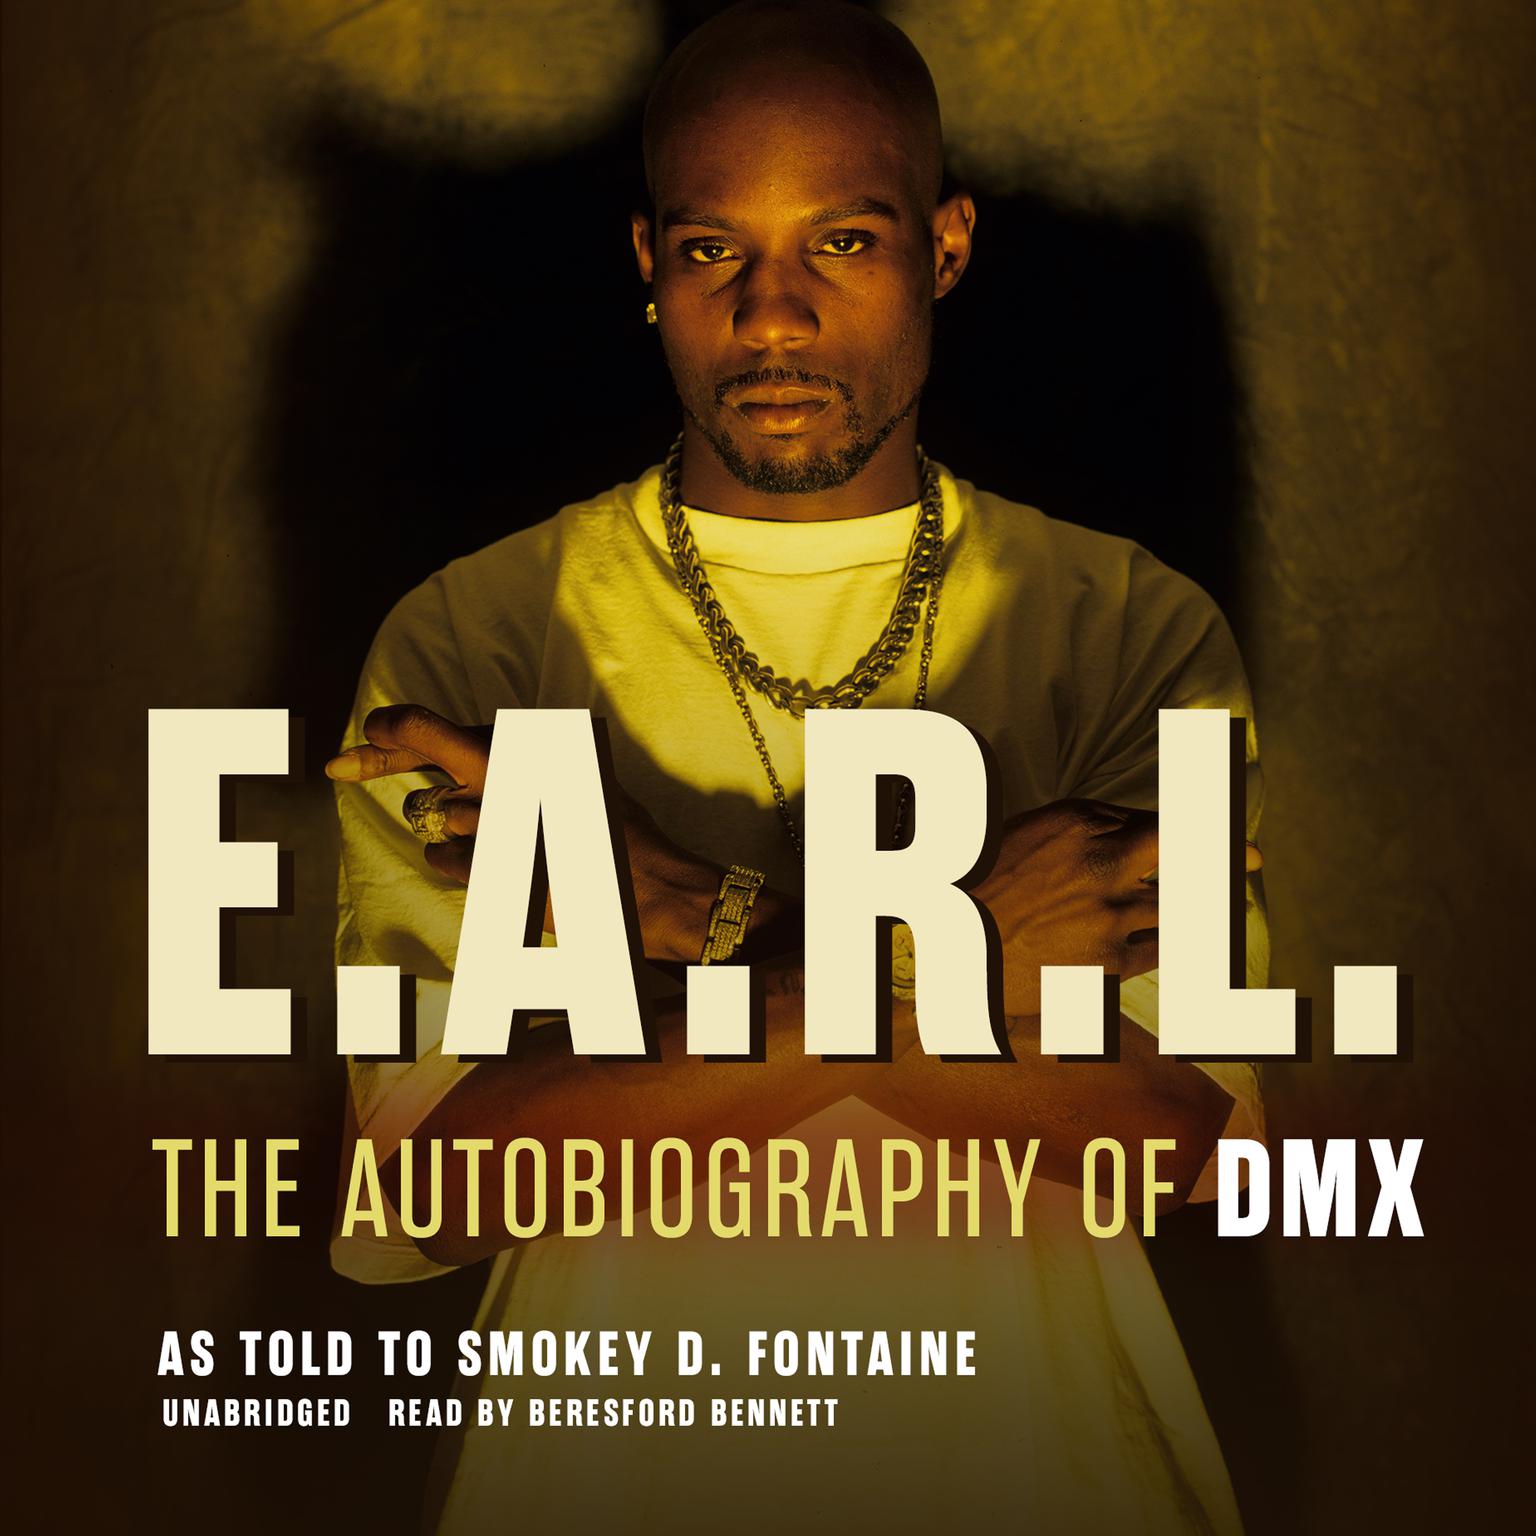 E.A.R.L.: The Autobiography of DMX Audiobook, by DMX 